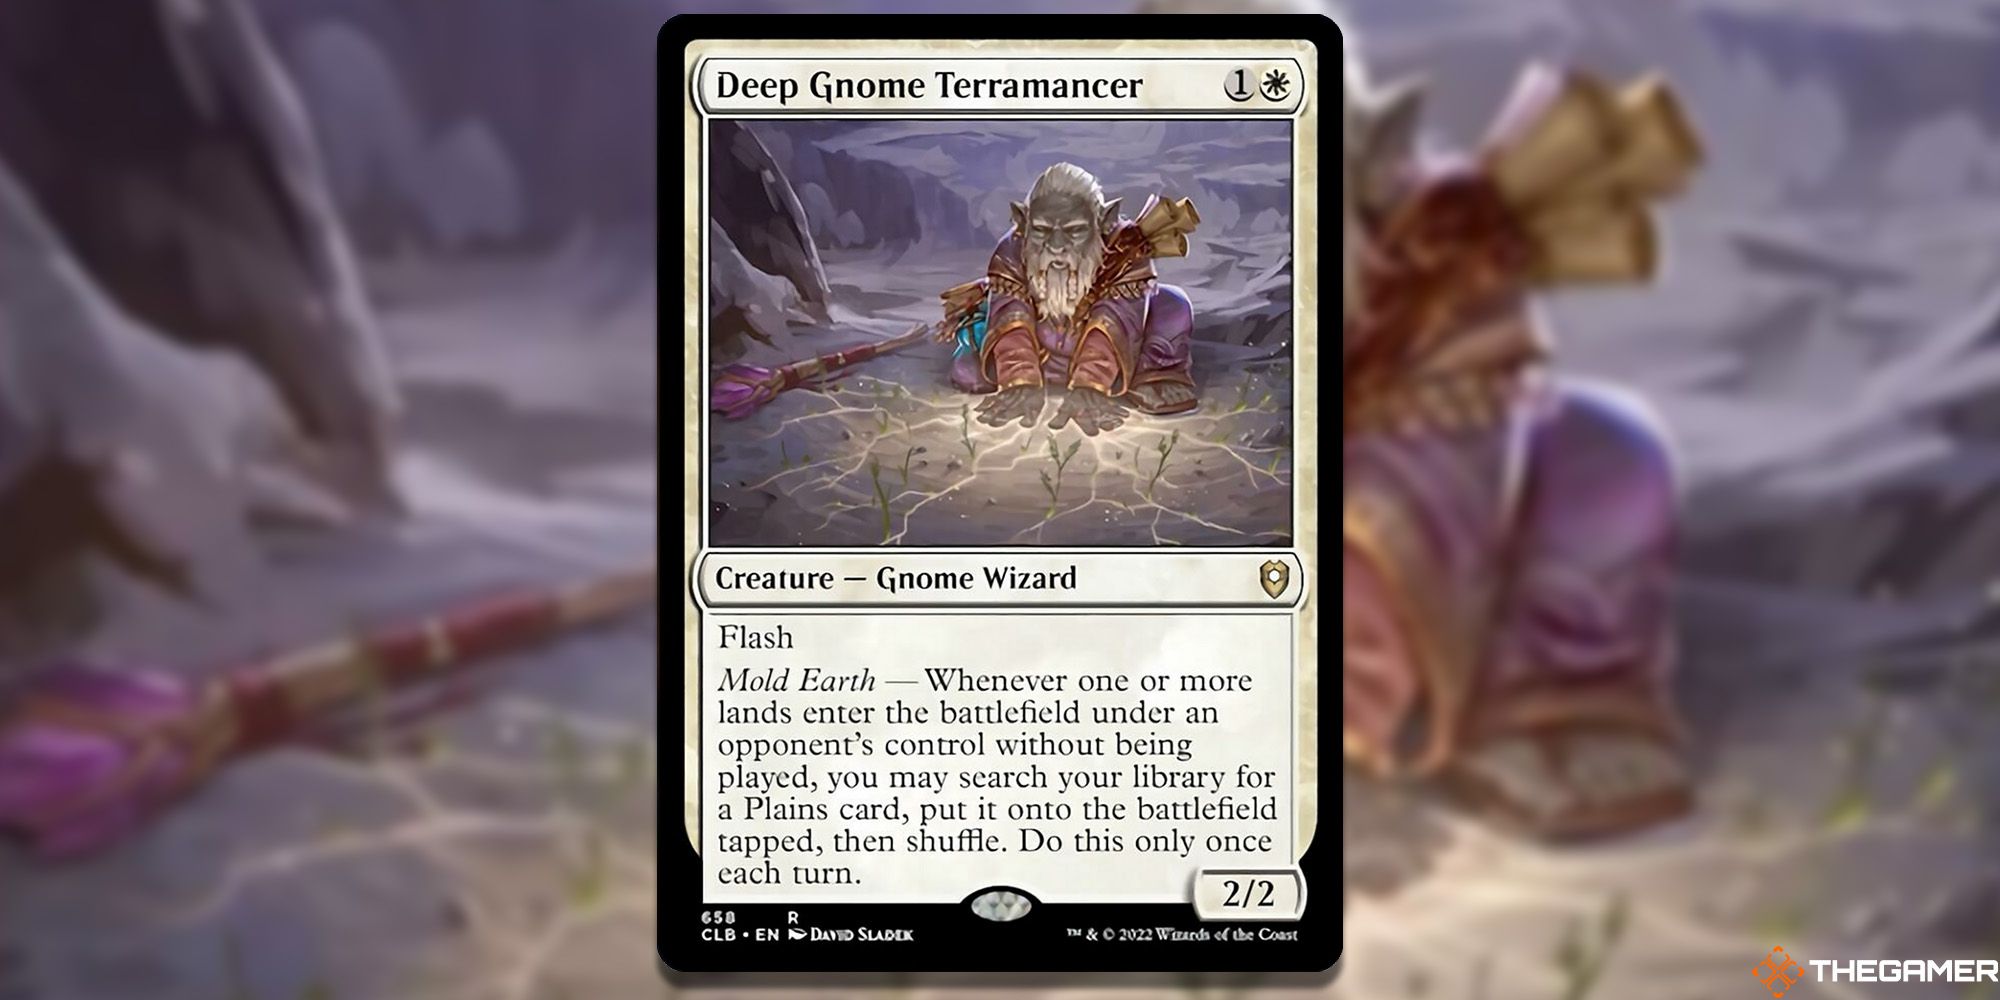 Deep Gnome Terramancer